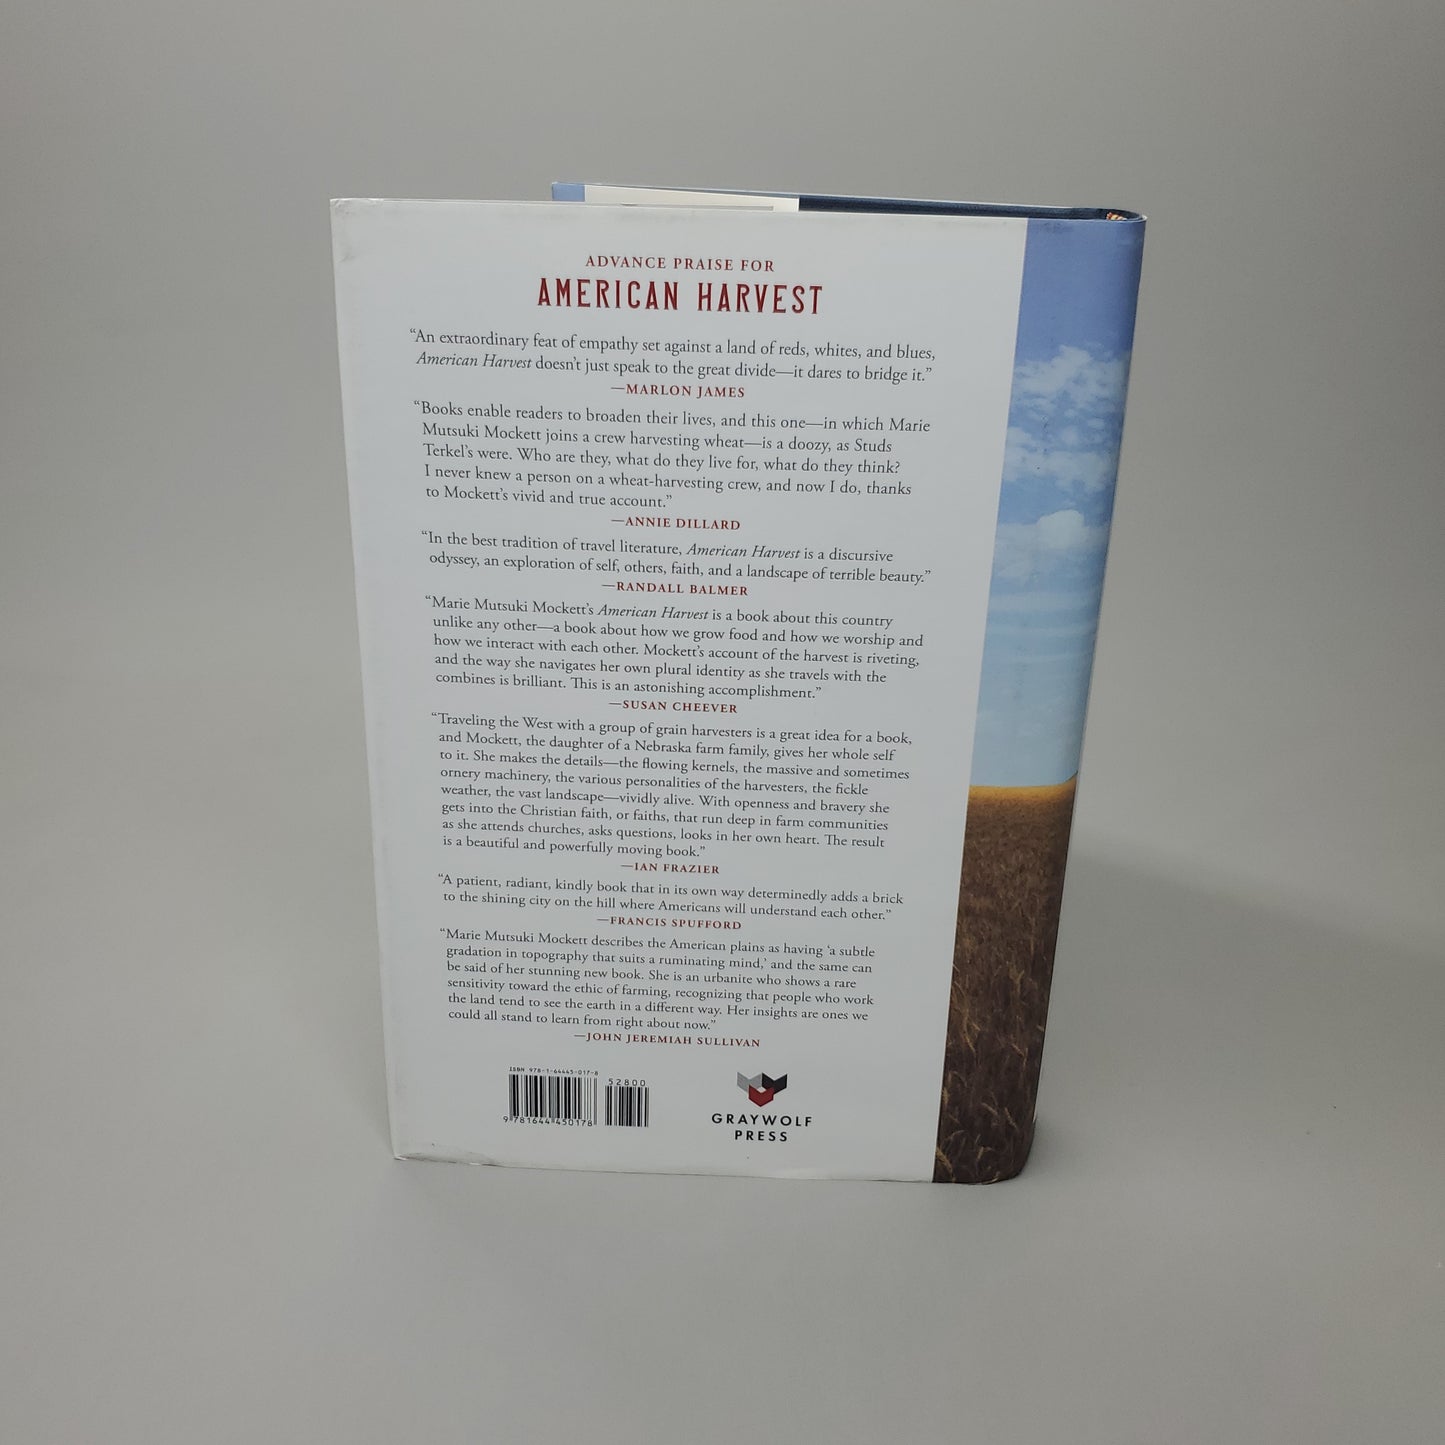 AMERICAN HARVEST God, Country, & Farming In The Heartland by Marie Mutsuki Mockett Book Hardback (New)